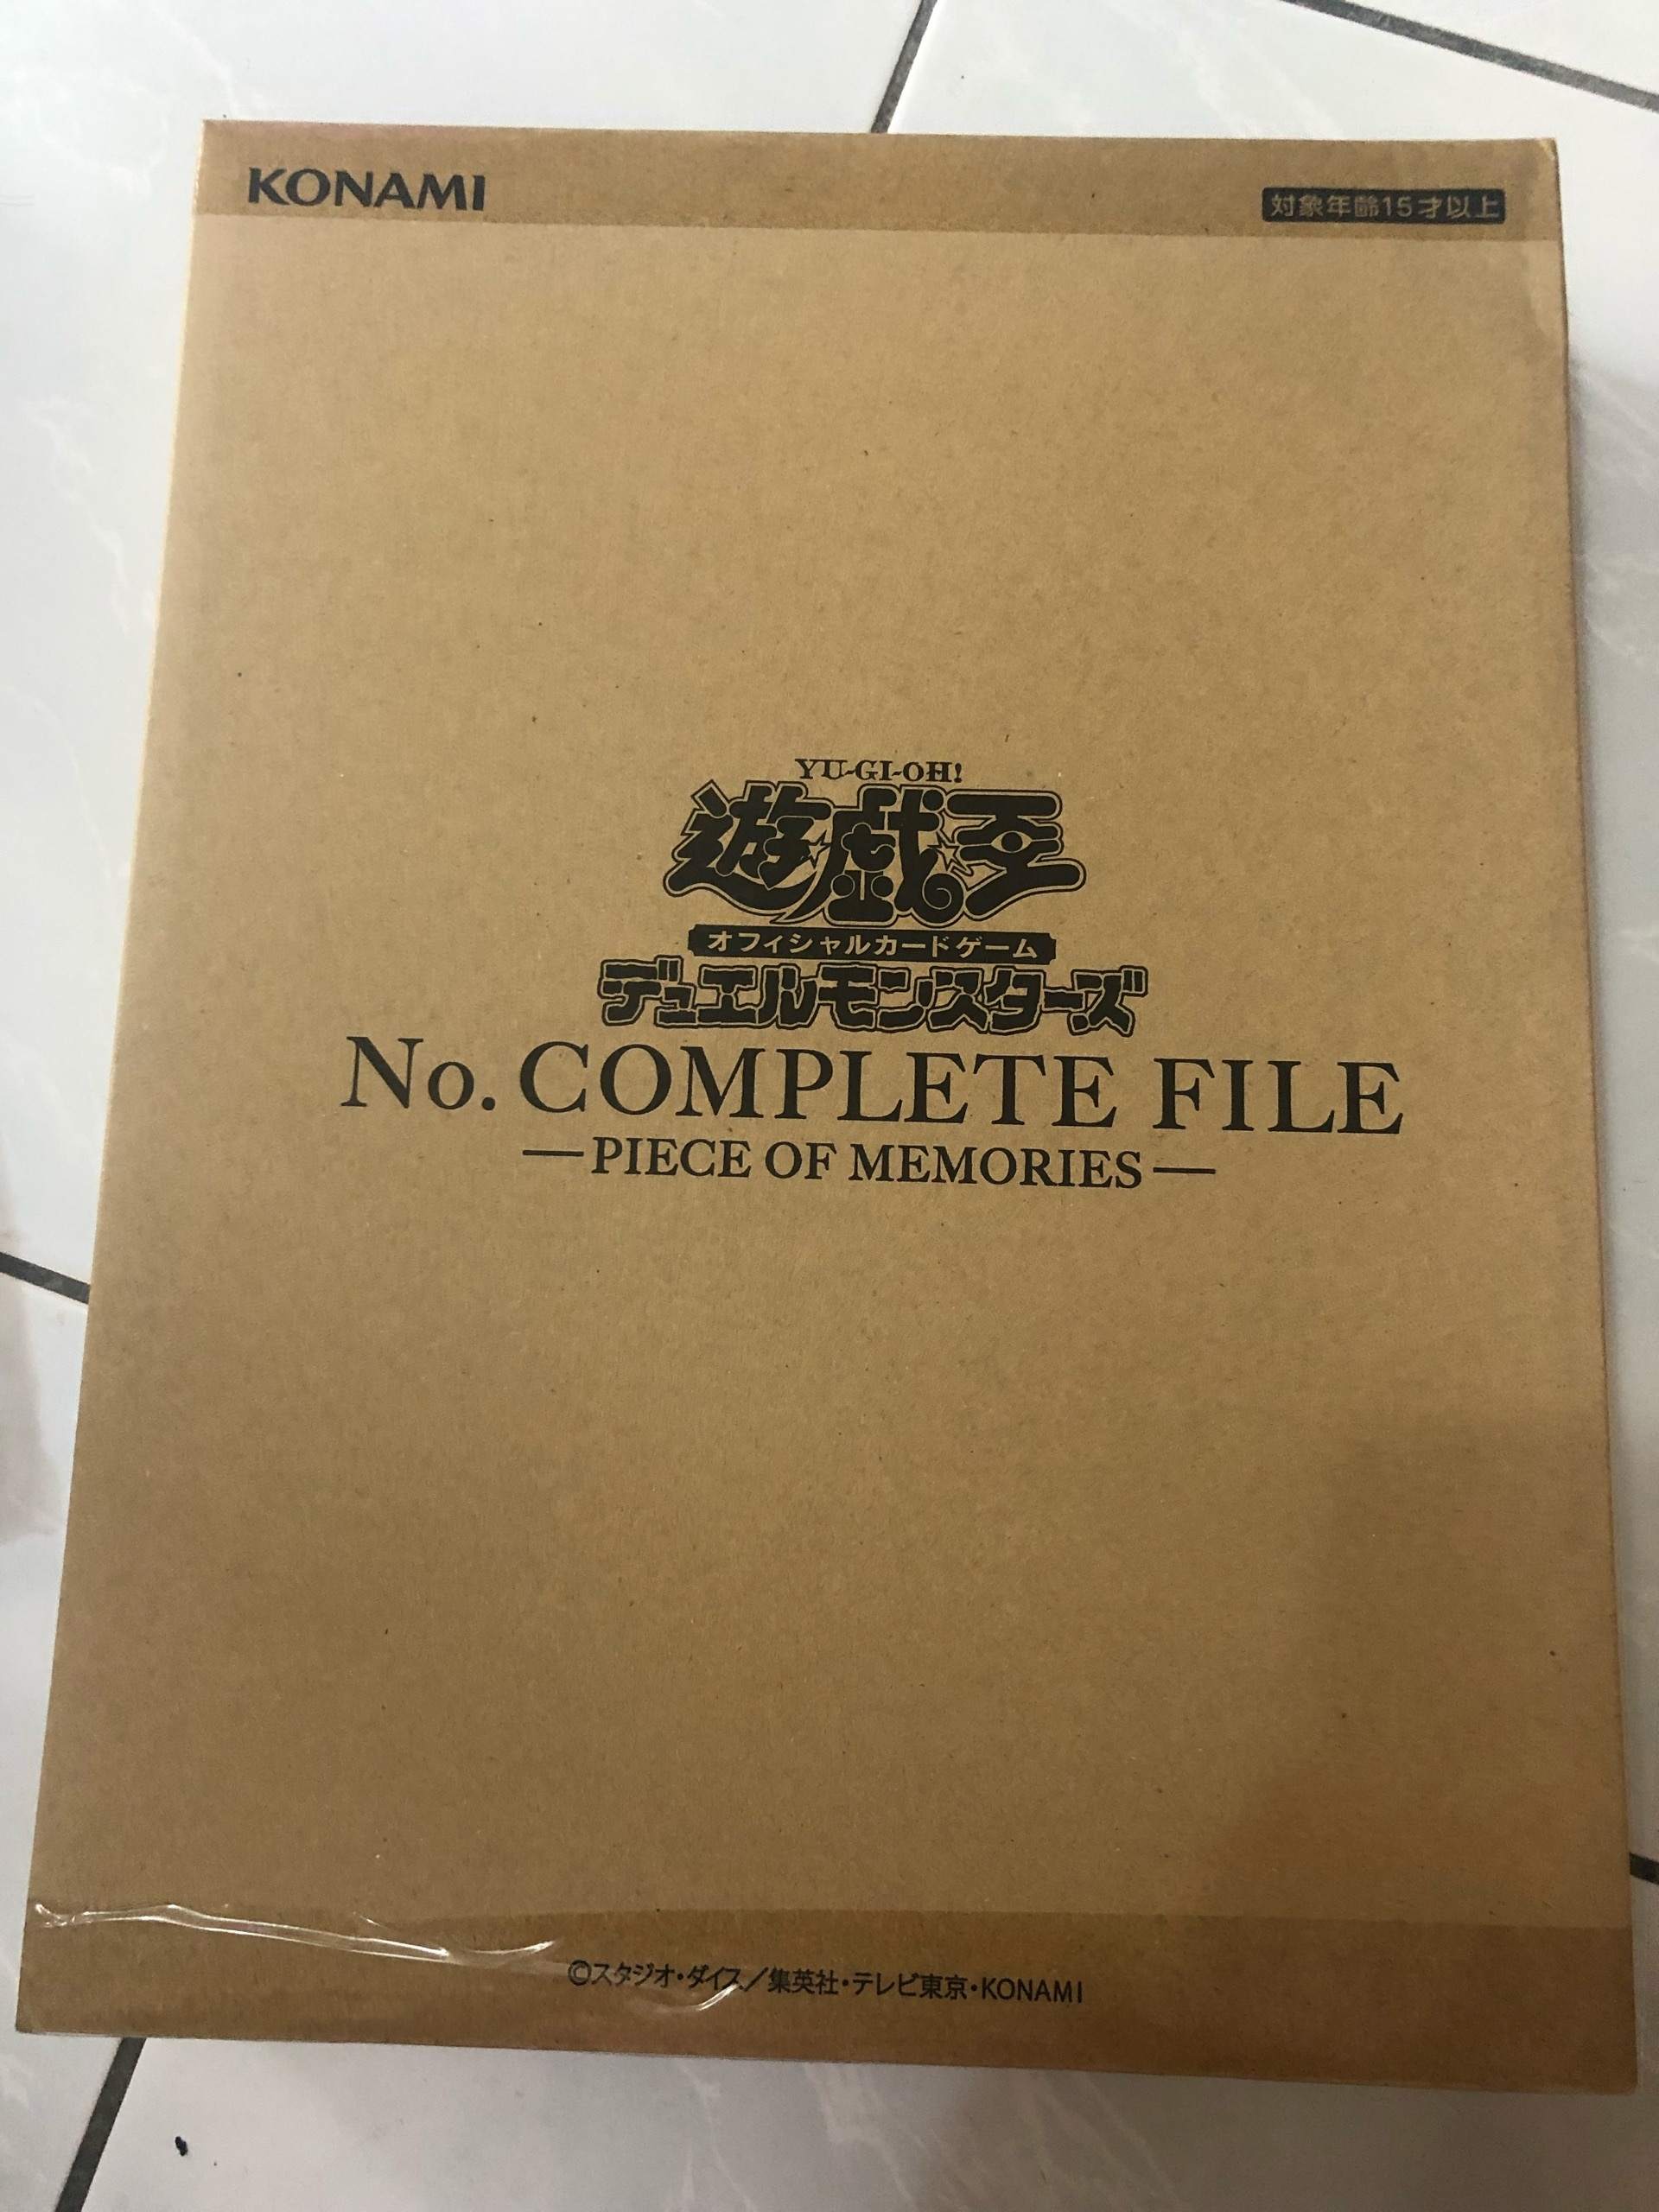 開箱No. COMPLETE FILE -PIECE OF MEMORIES - vcfdre13的創作- 巴哈姆特